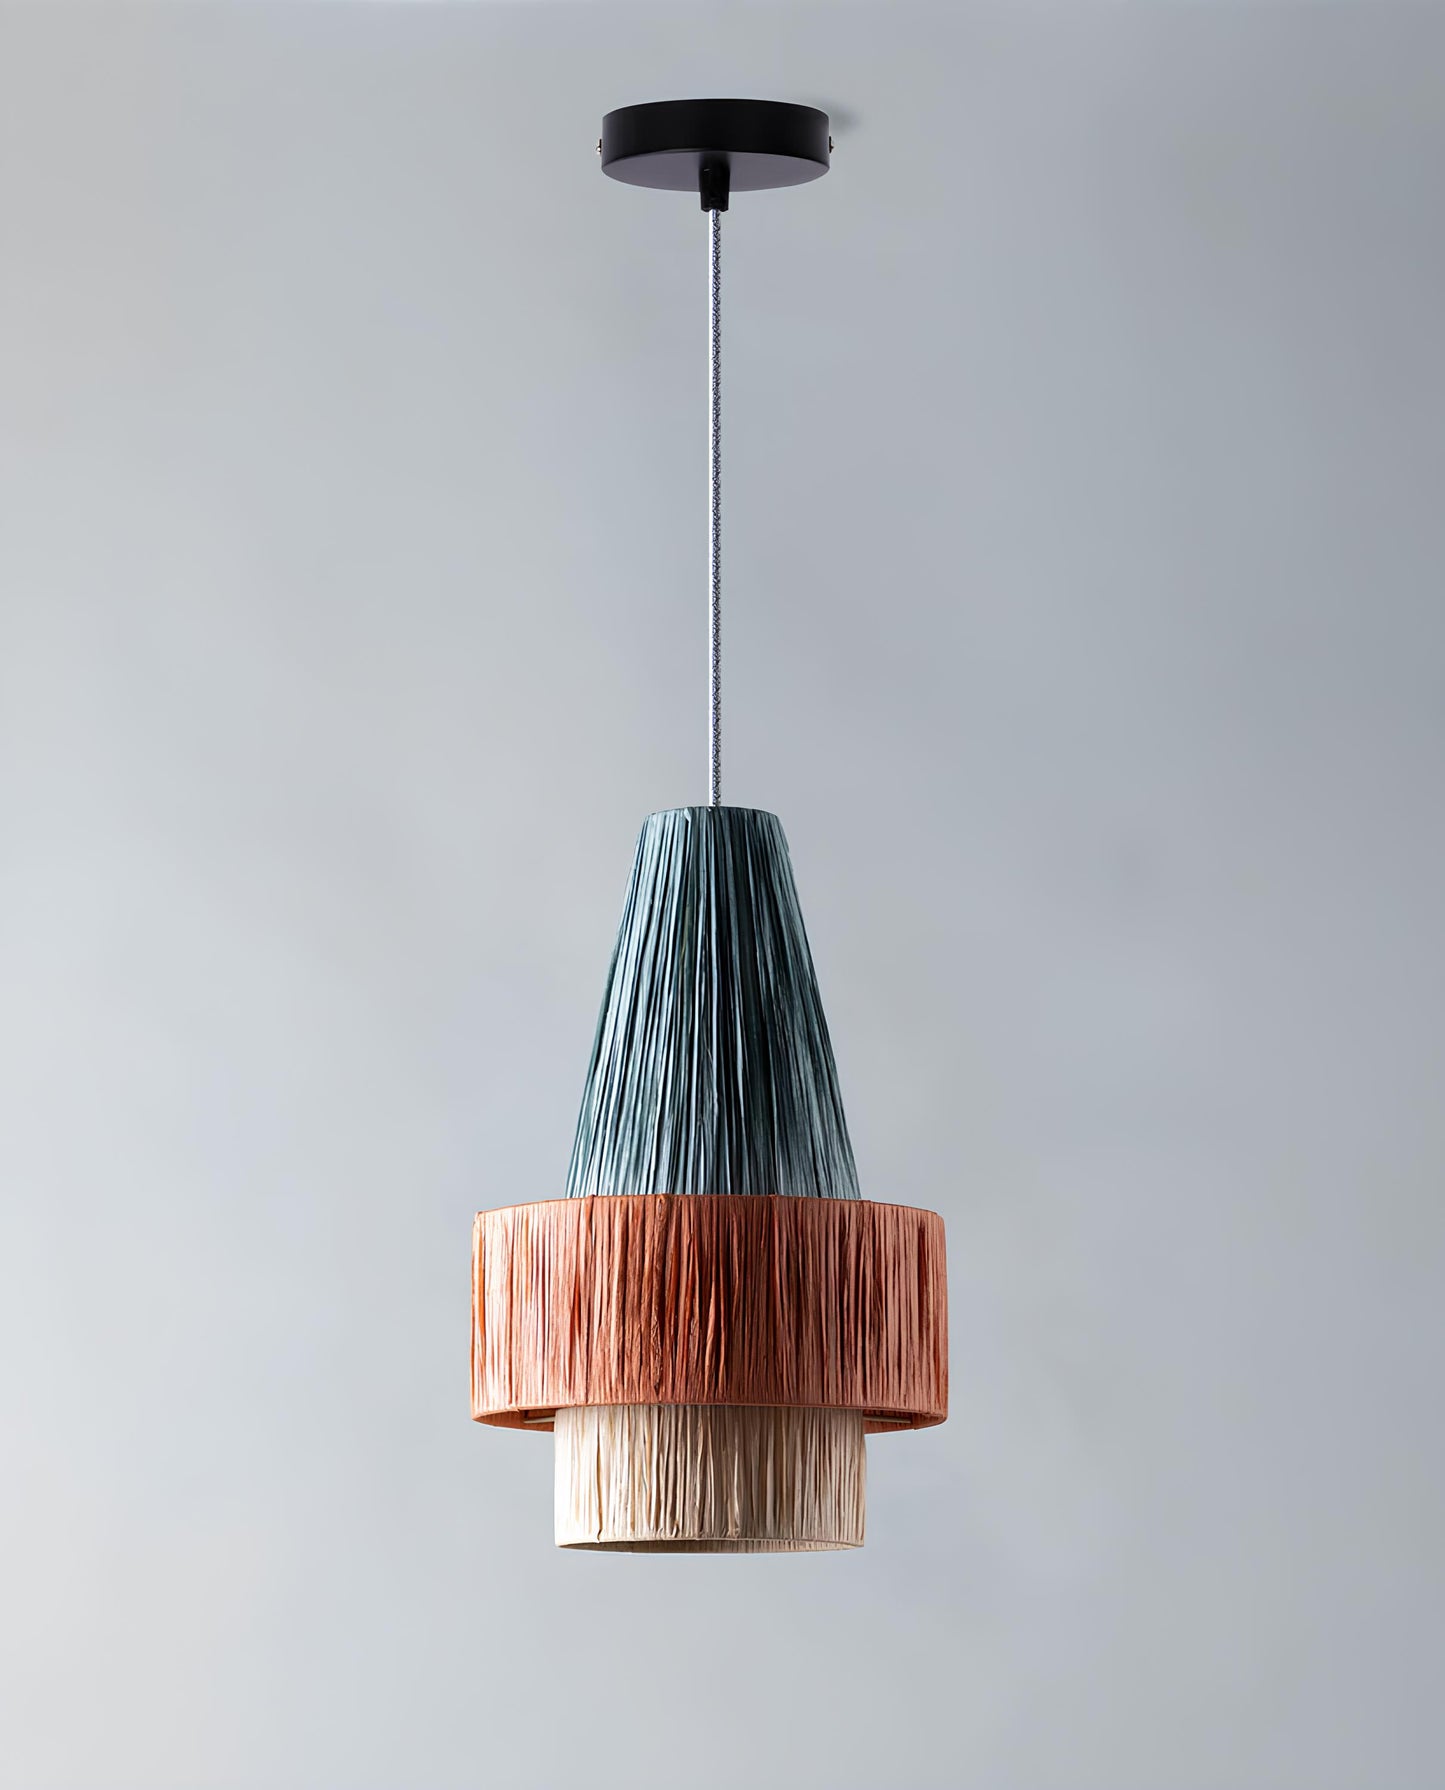 Bamboo Hanging lamp for Living Room | Rattan Pendant light | Cane ceiling light - Tanya - Akway